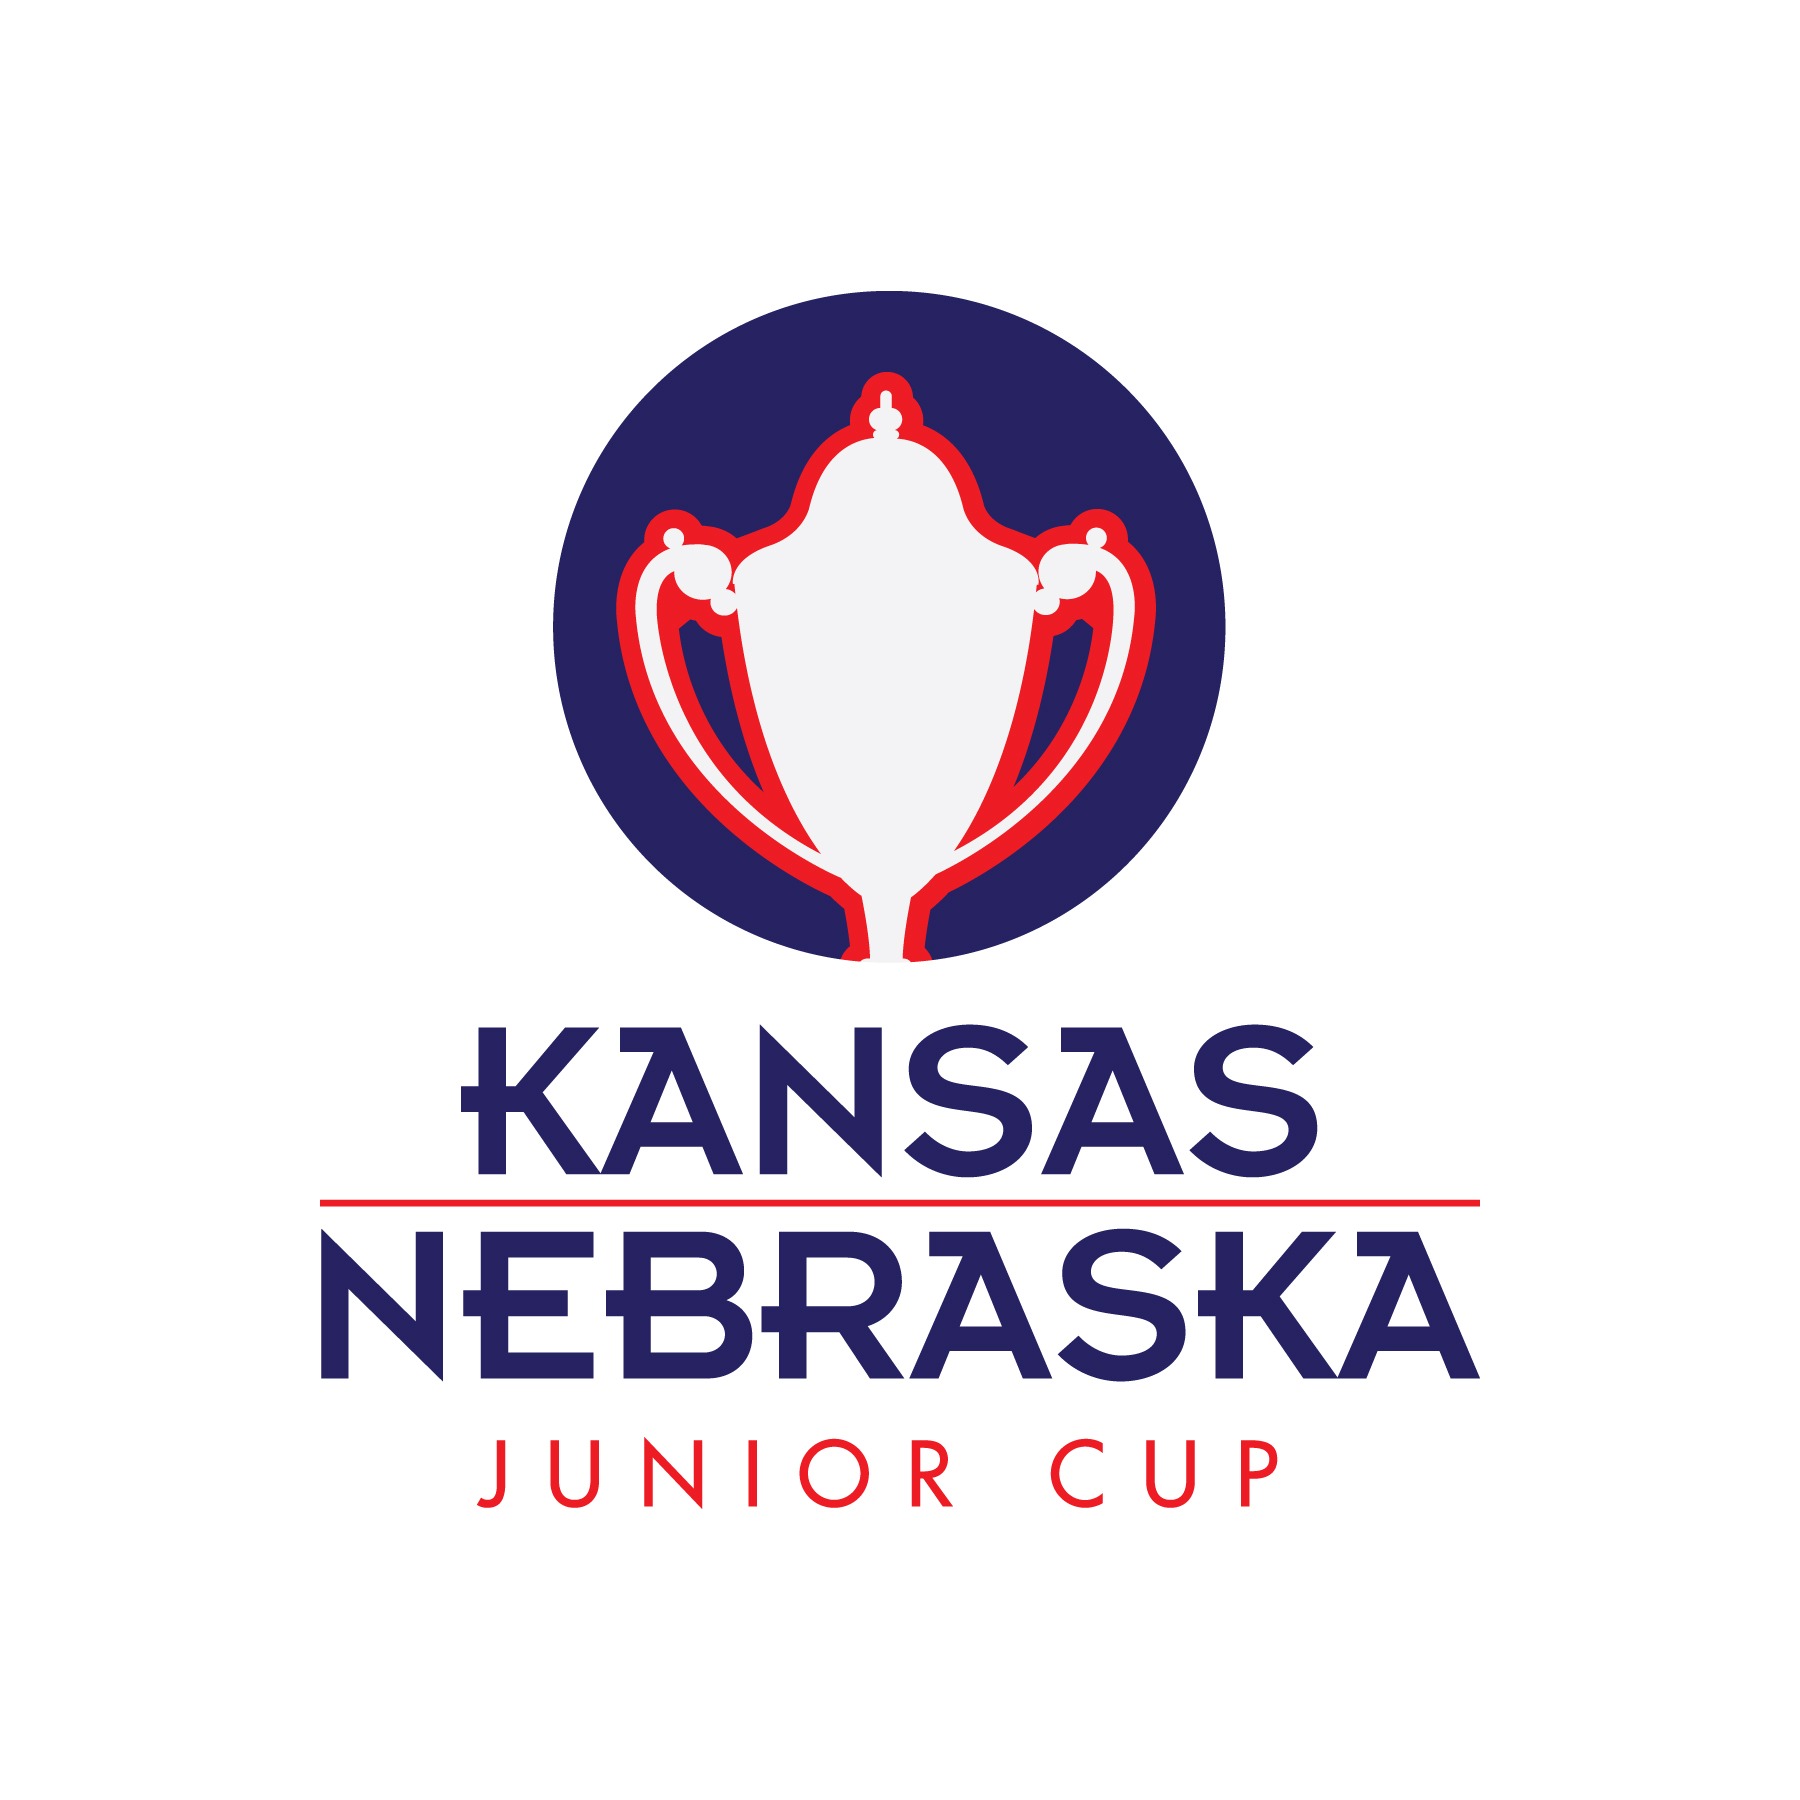 2019 KansasNebraska Junior Cup Teams Selected